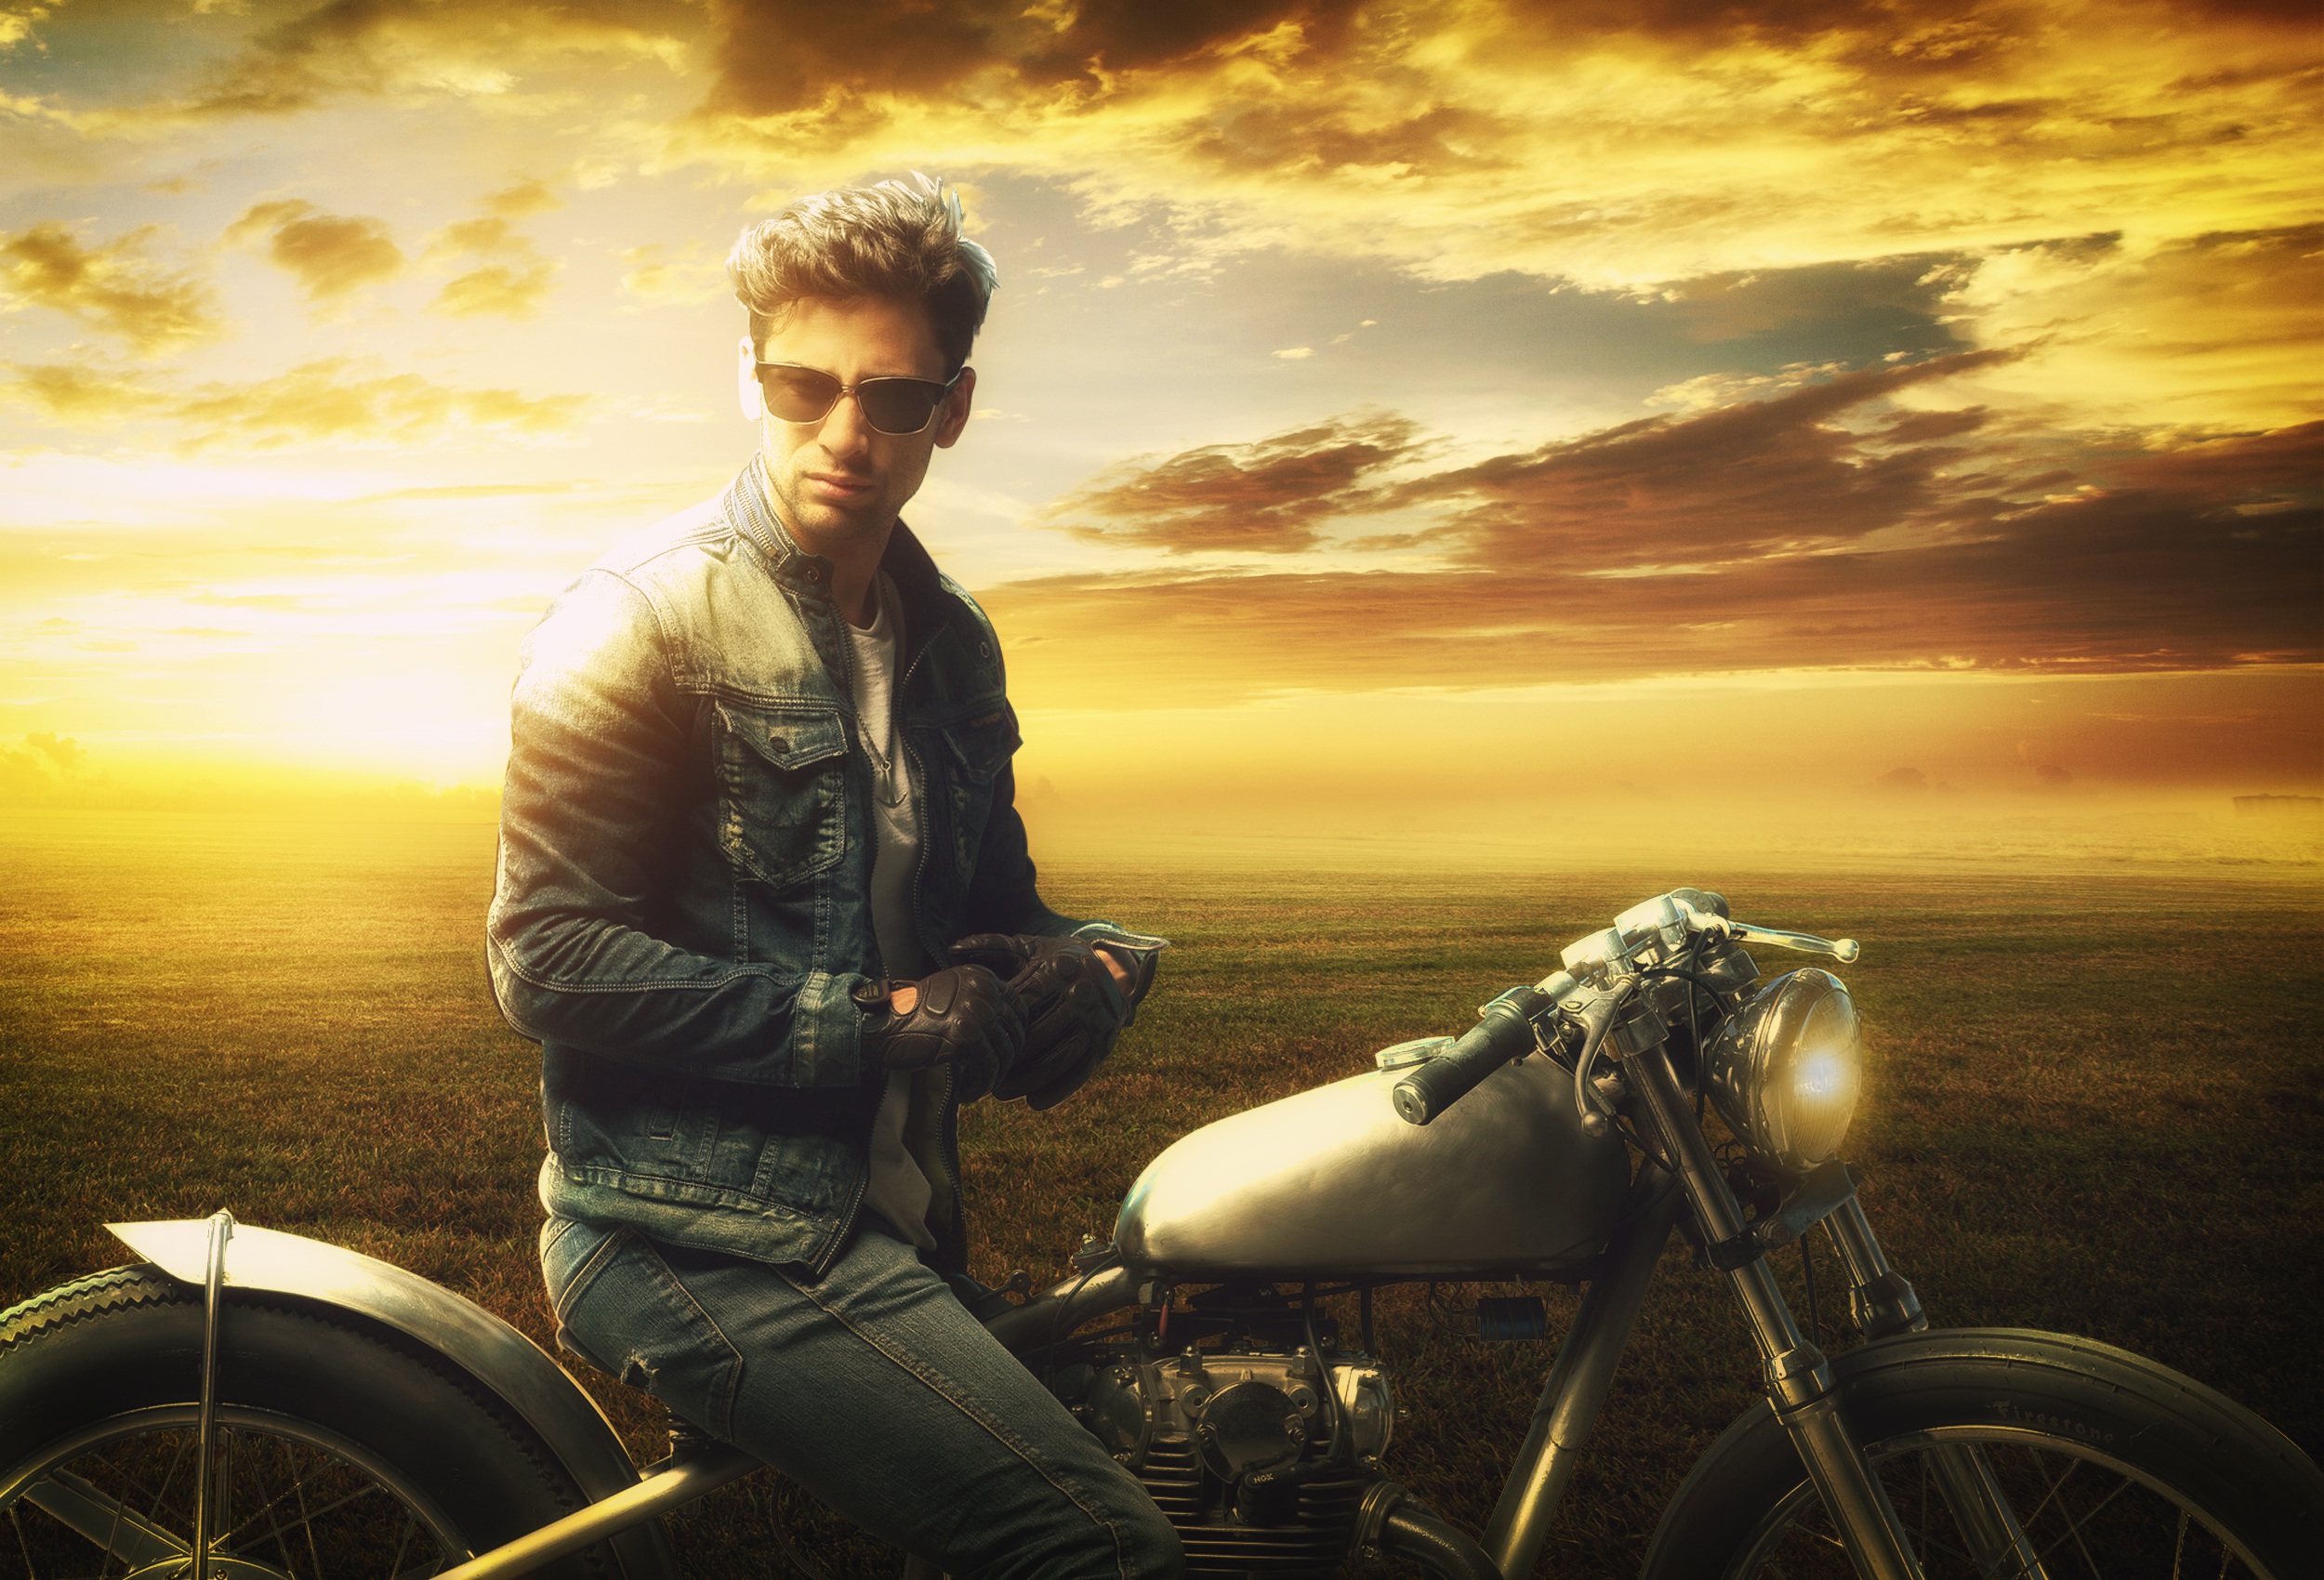 Man on a Motorbike at Sunset by Roshan Falkey